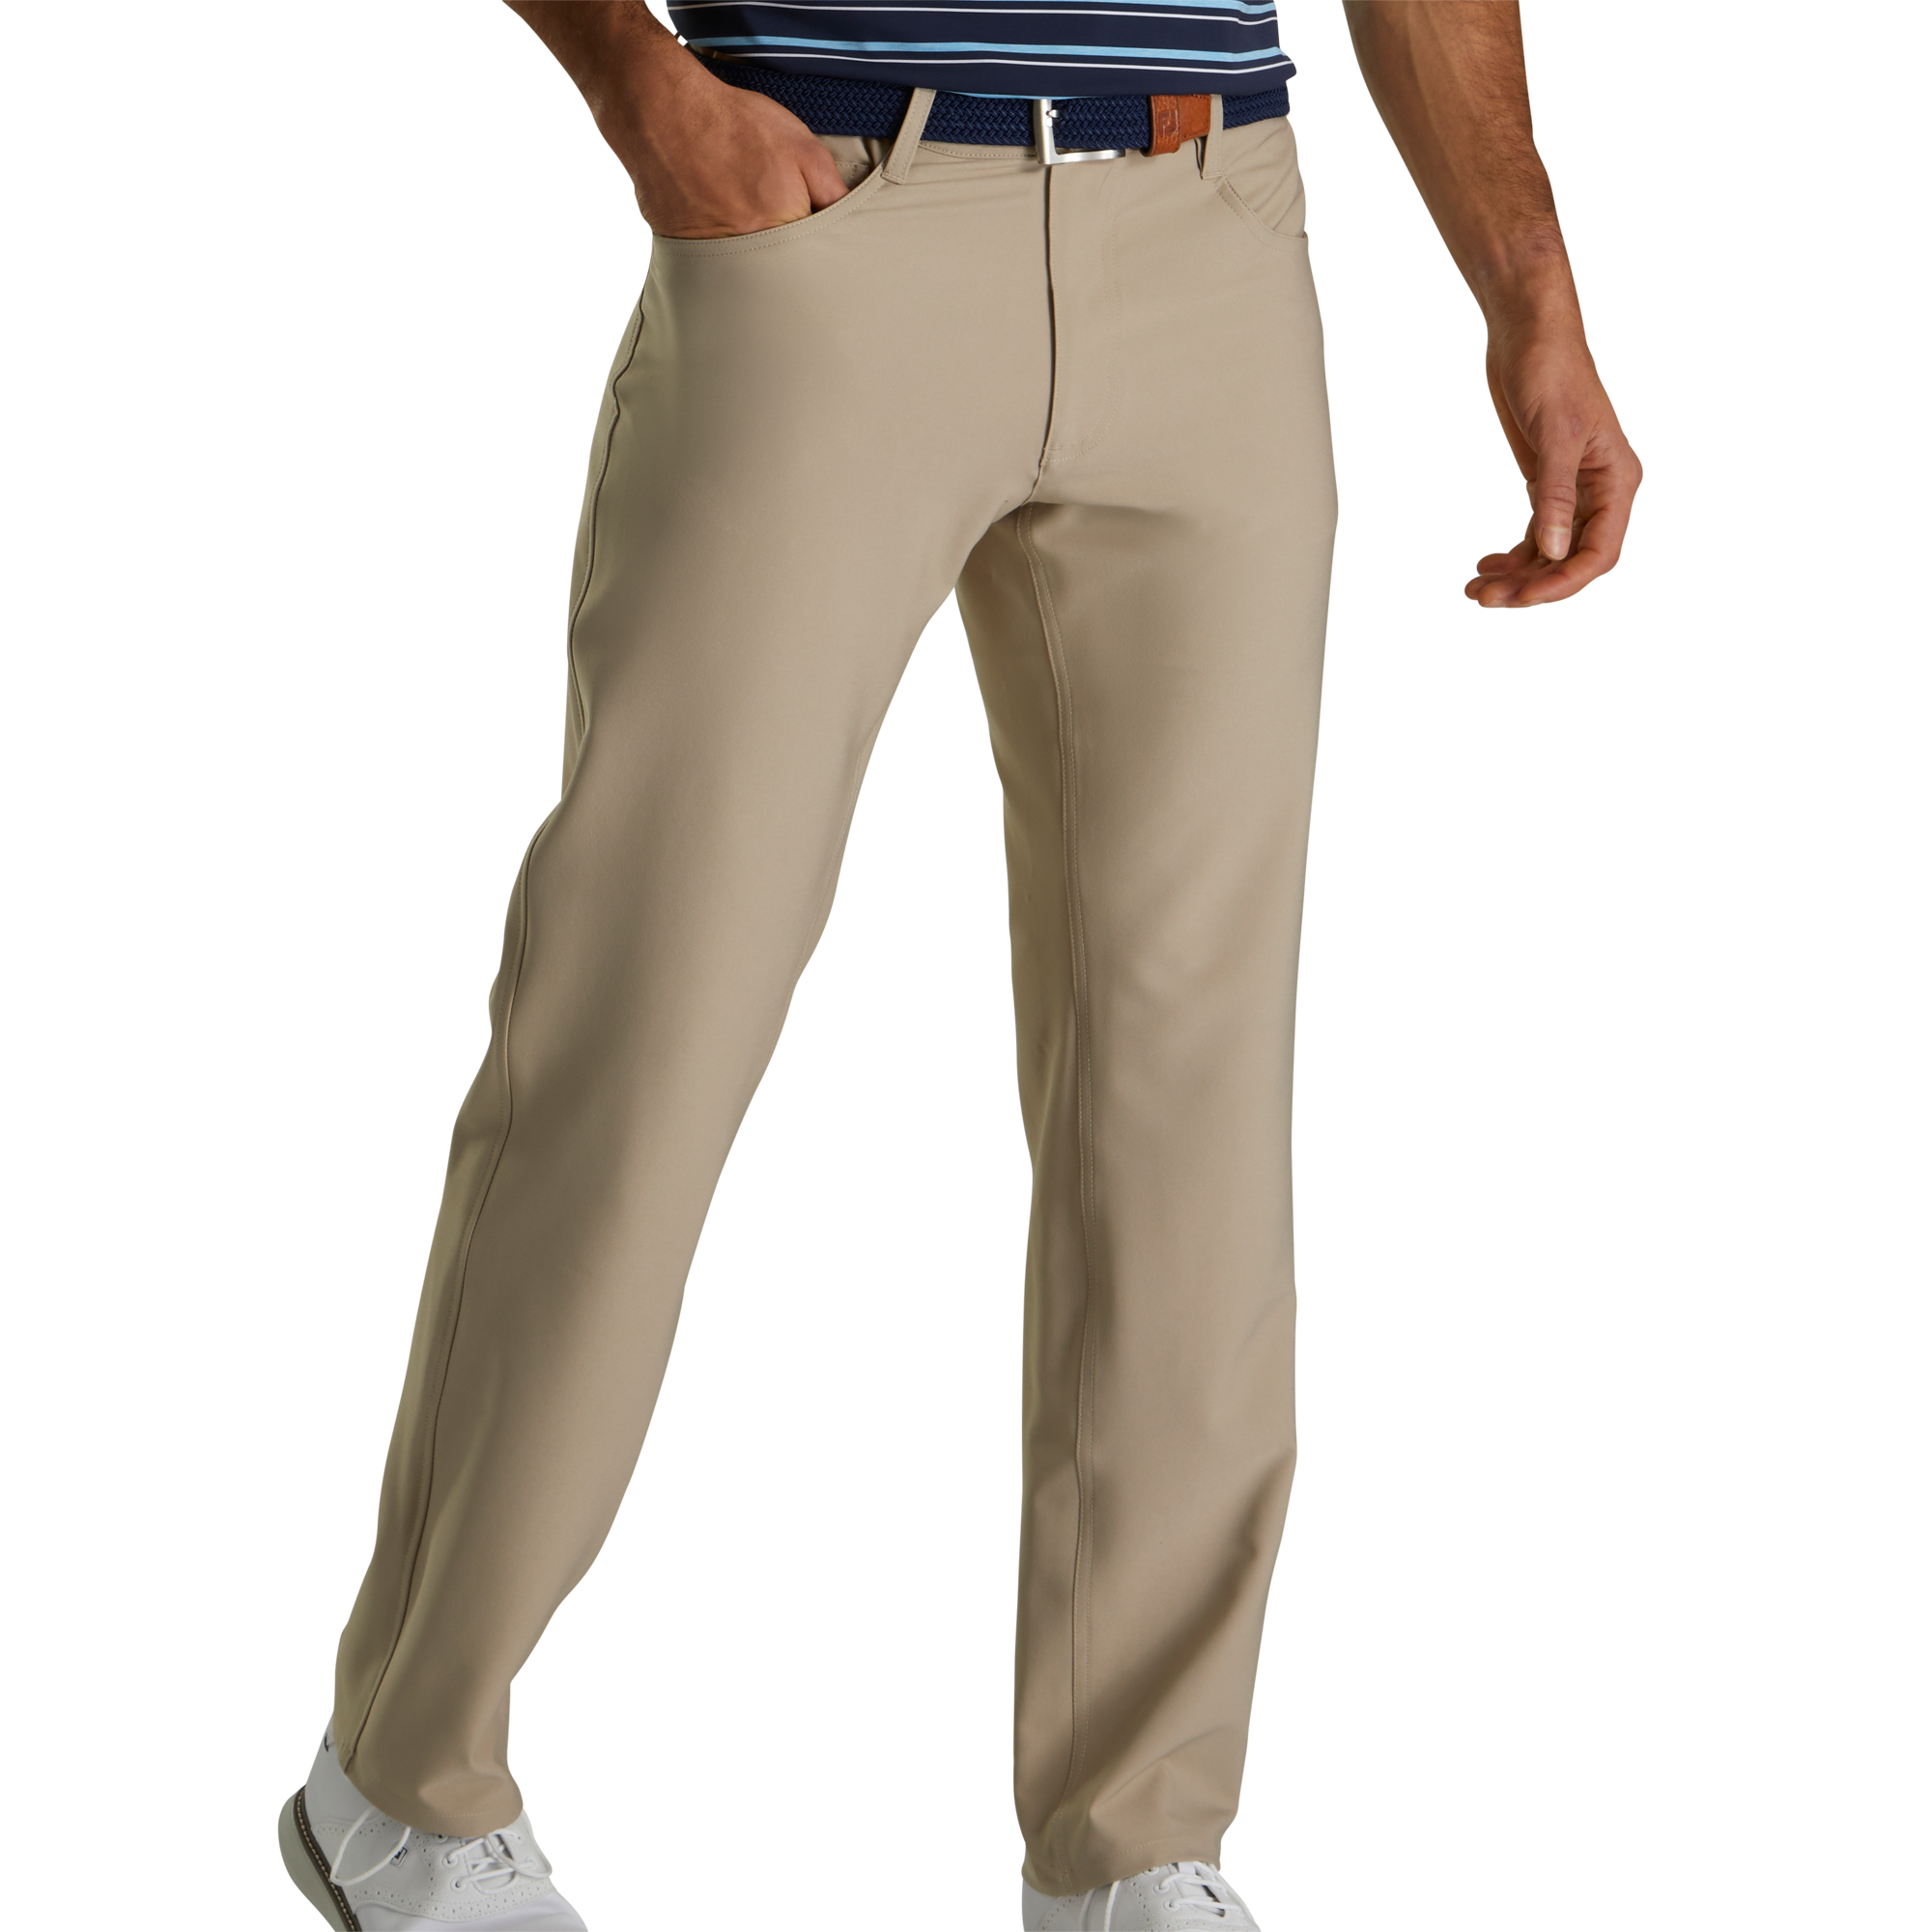 Player Fit 5-Pocket Golf Pant